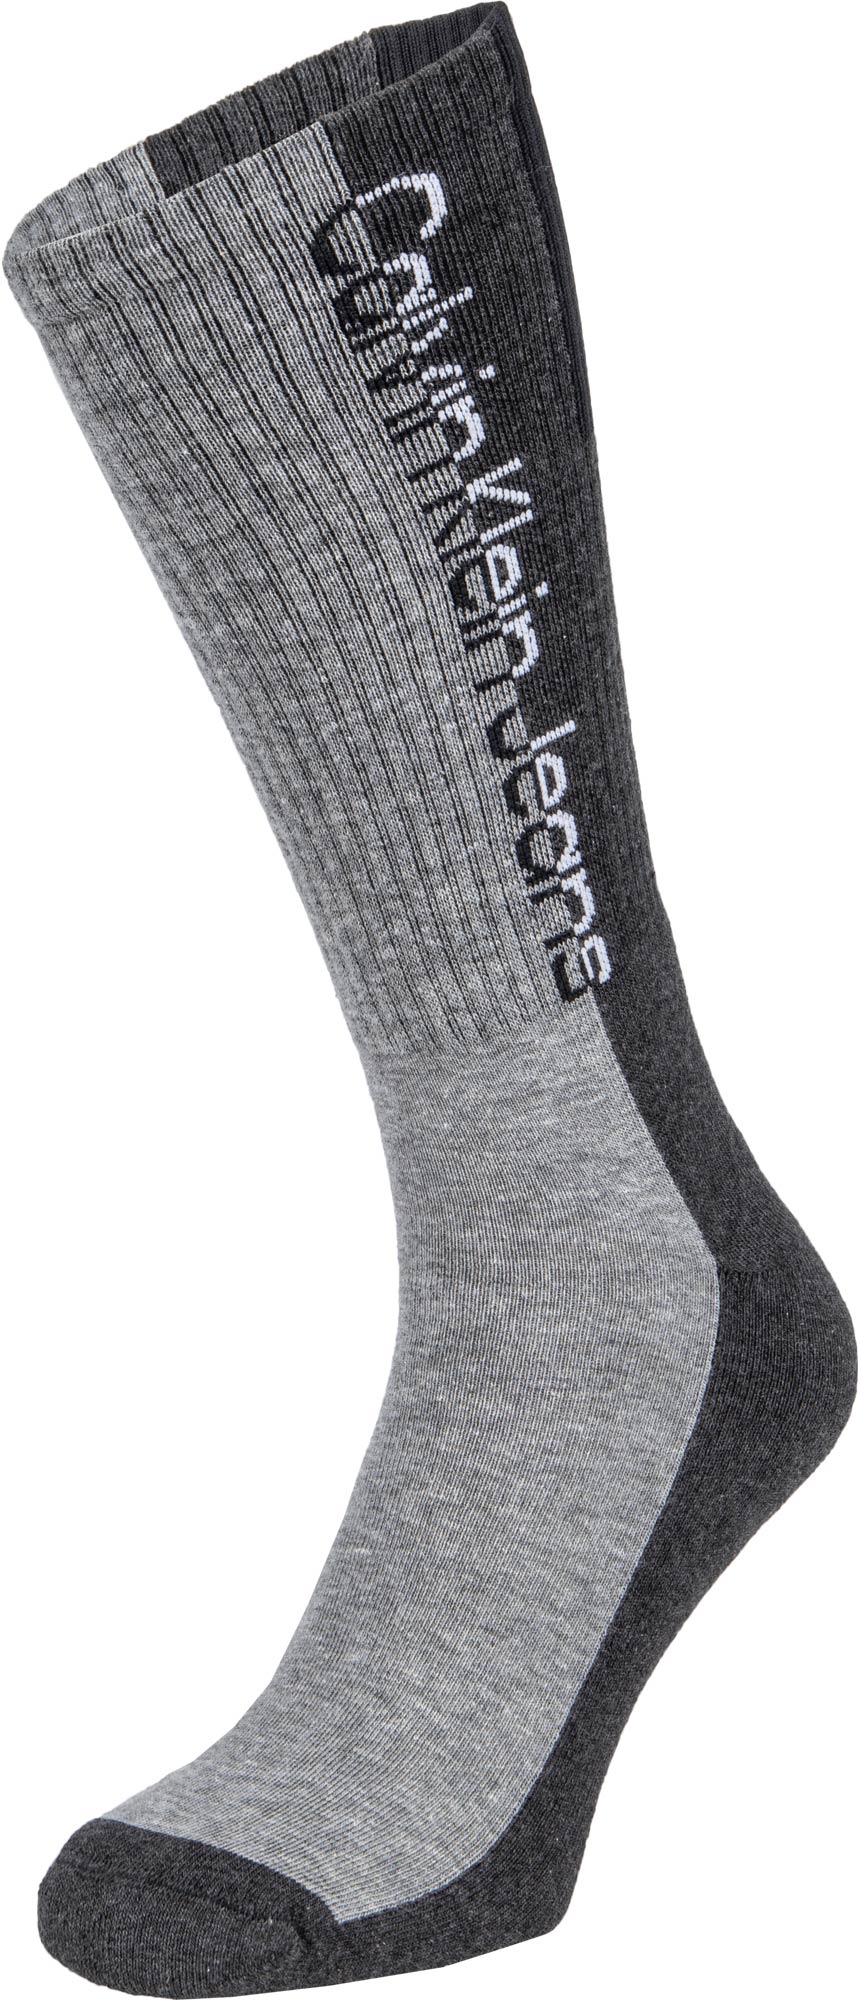 Men's socks